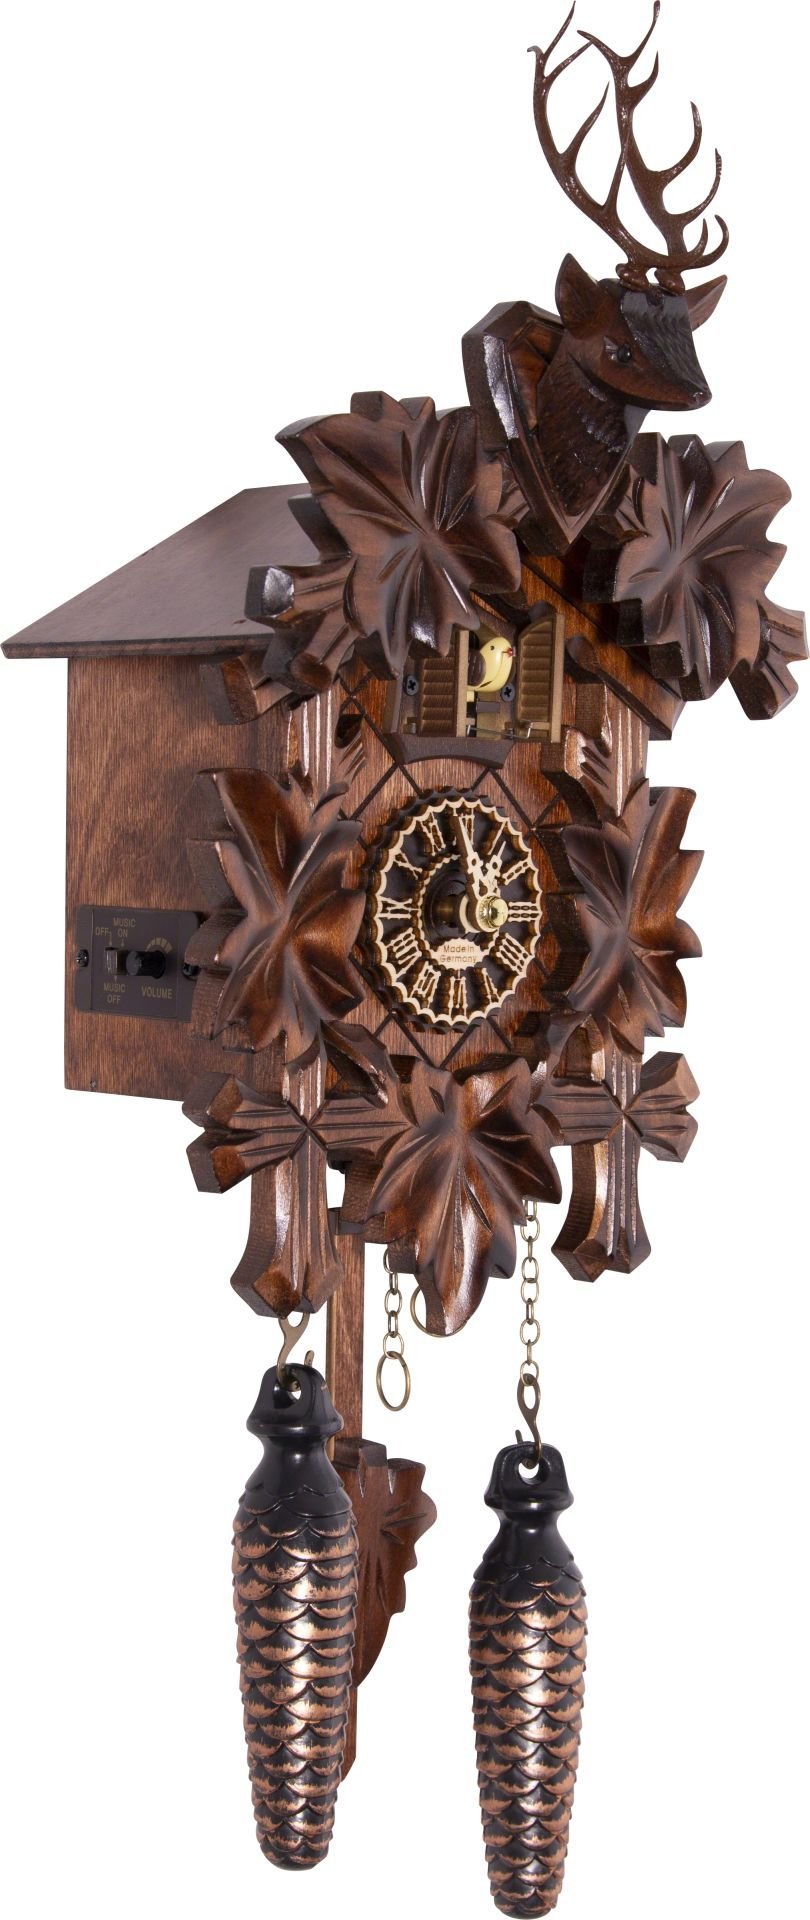 Cuckoo Clock Carved Style Quartz Movement 23cm by Trenkle Uhren